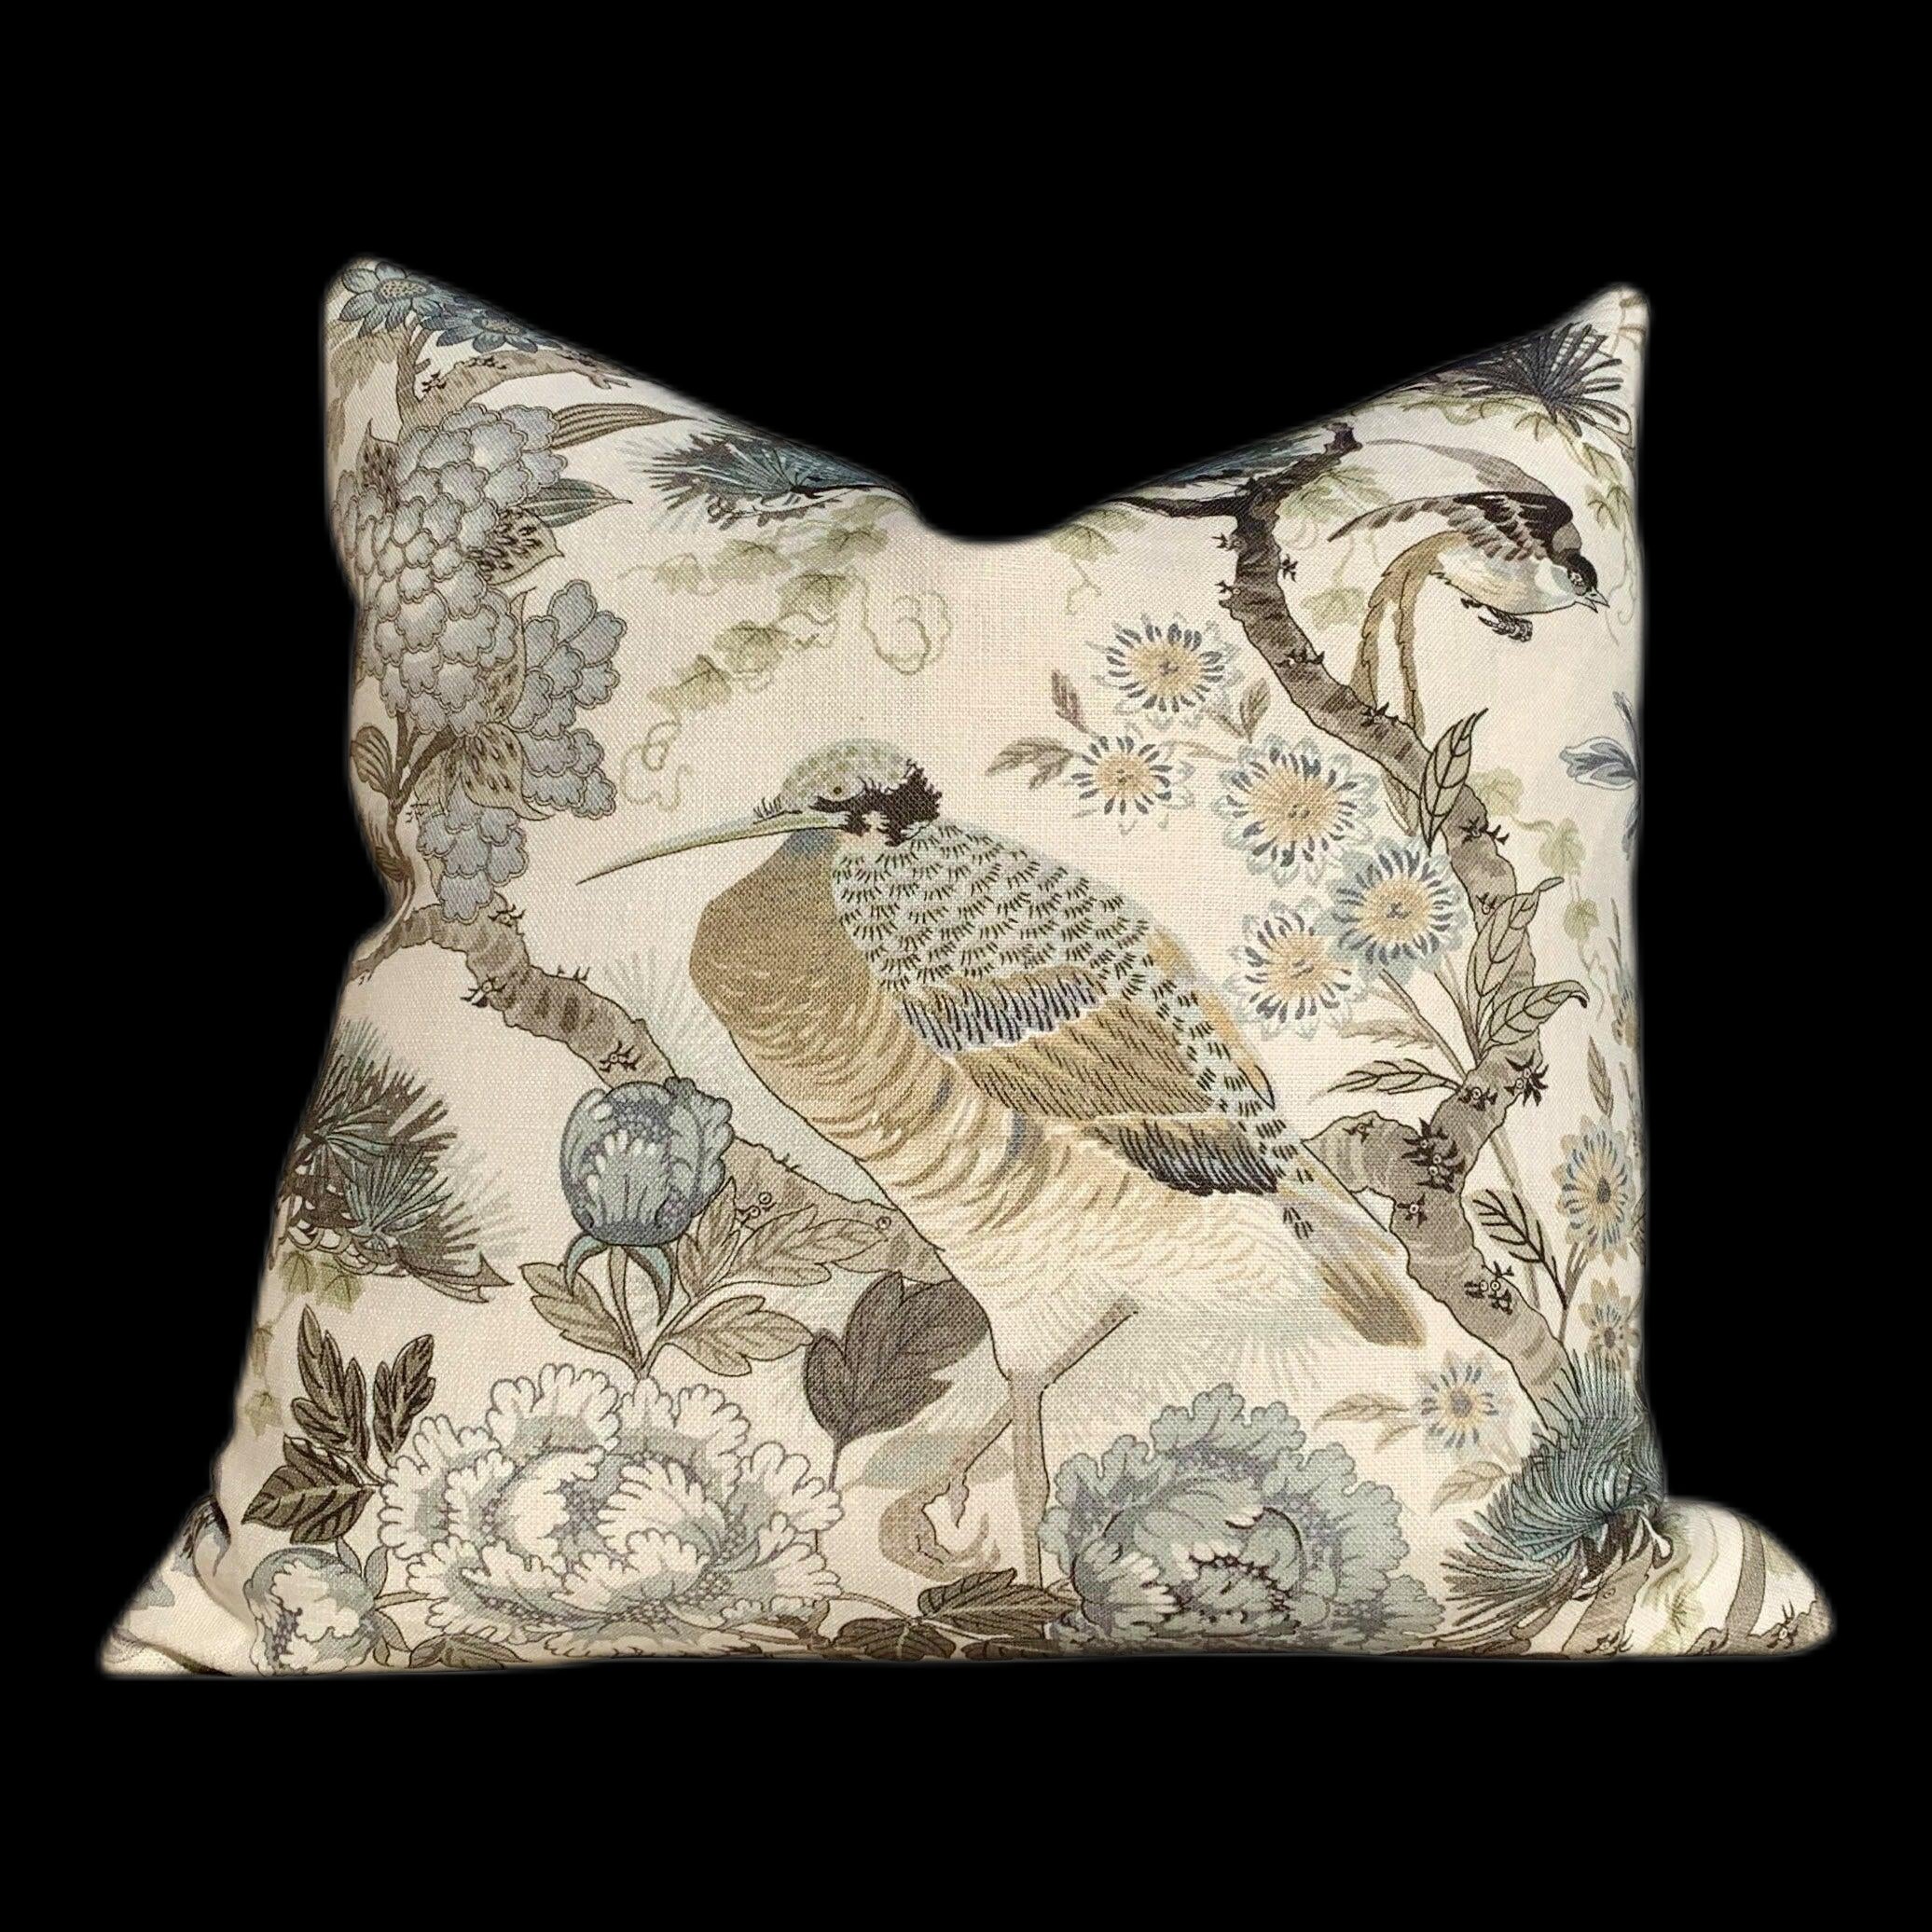 Shenyang Linen Pillow in Parchment. Chinoserie Greige Decorative Pillow Scalamandre Linen Large Bird Cushion Pillows Beige Euro Sham Cover